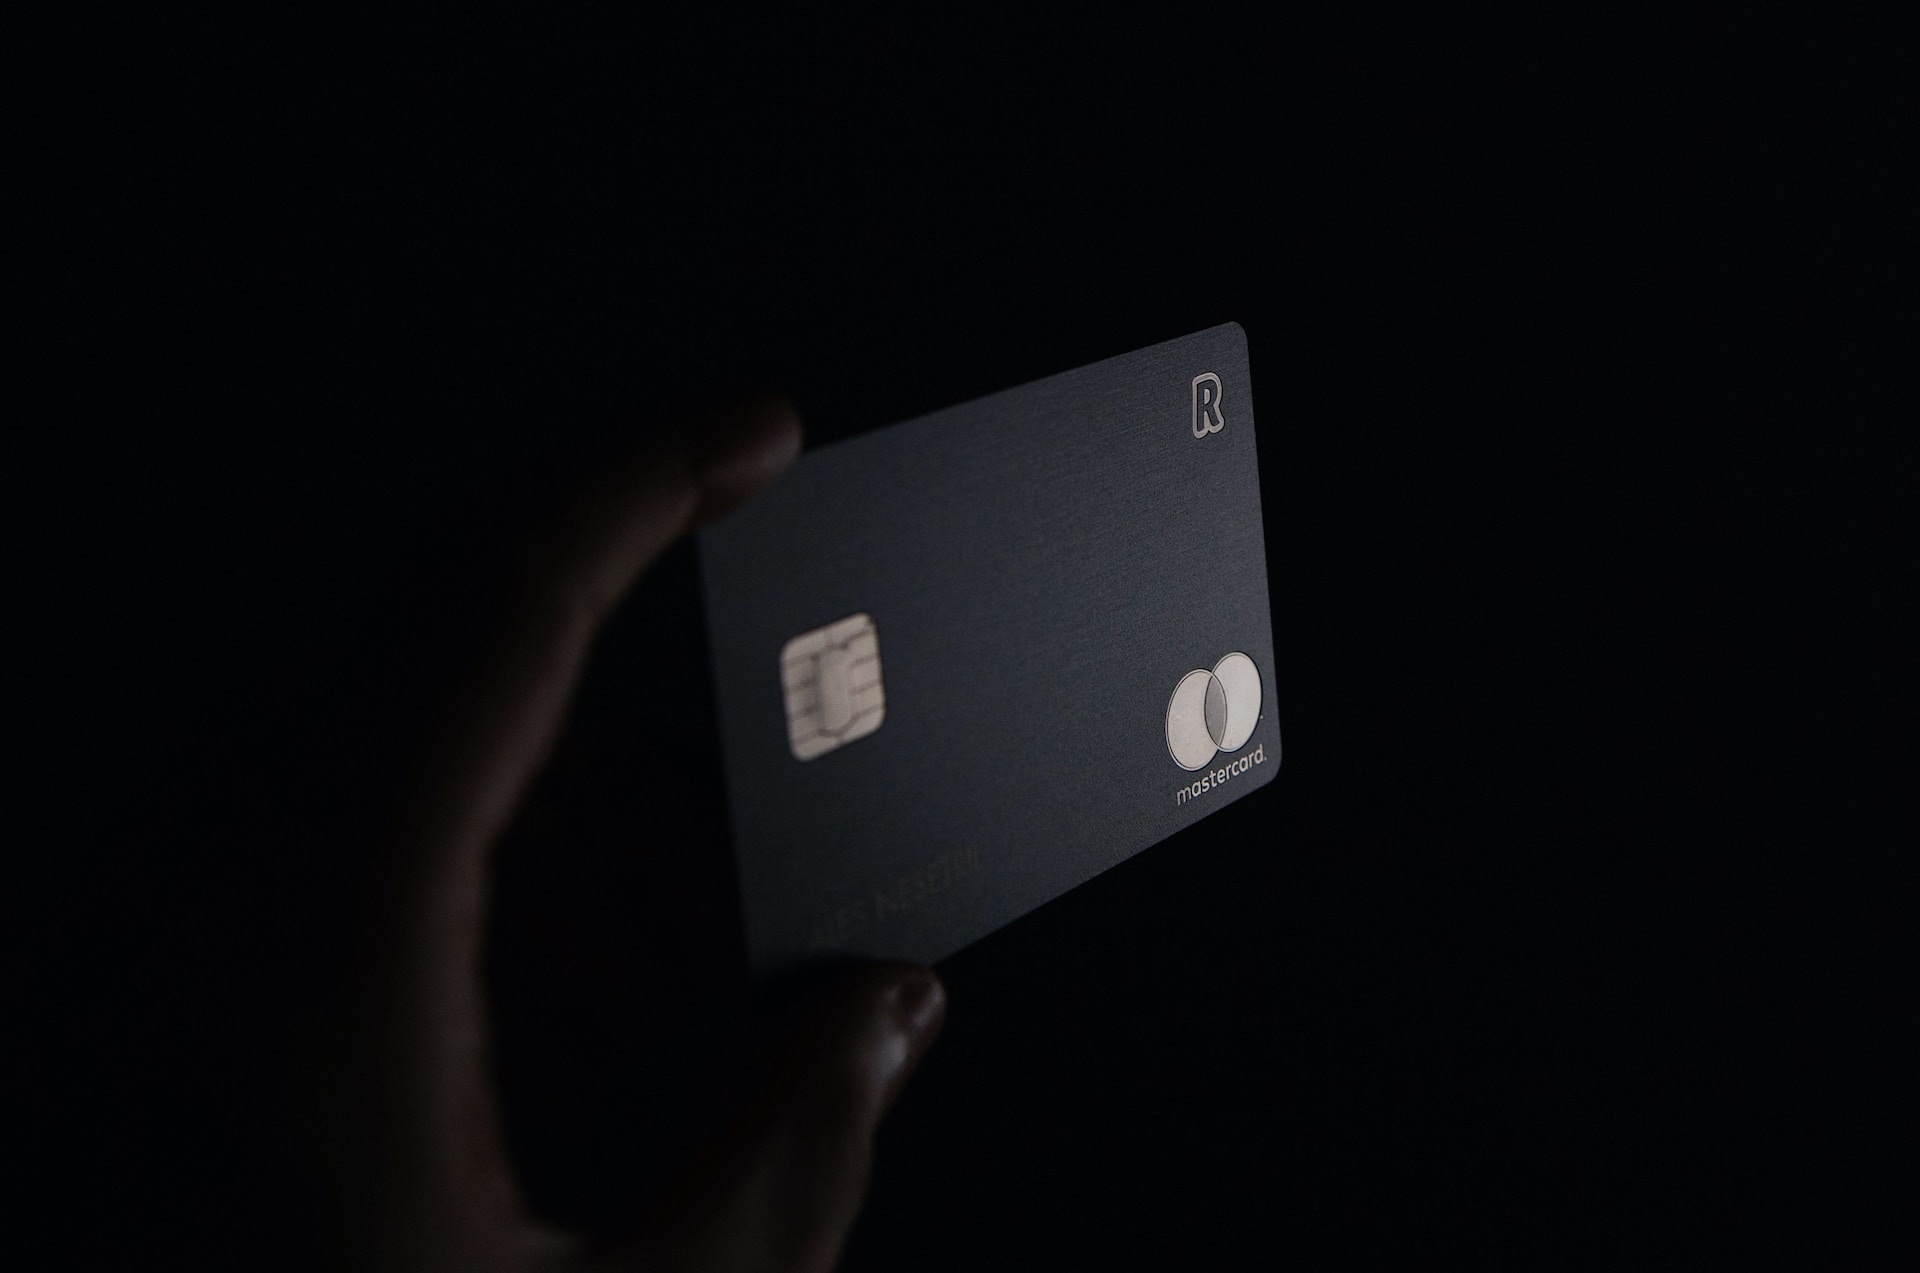 A black debit card